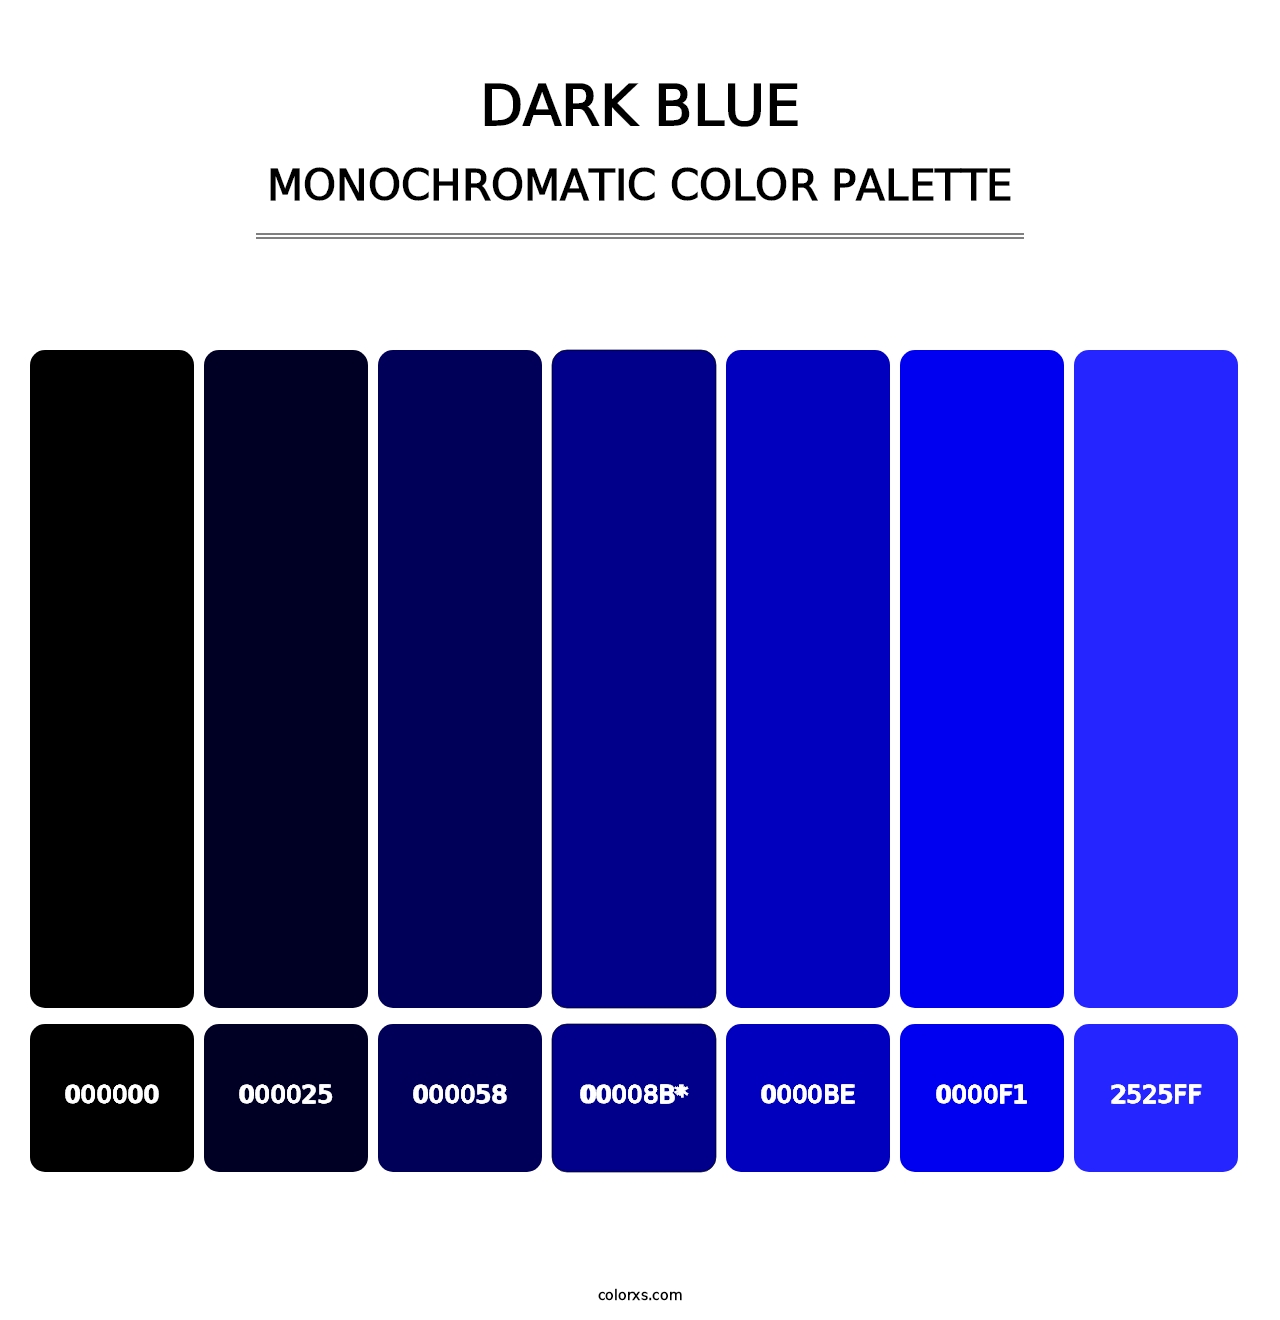 Dark Blue - Monochromatic Color Palette